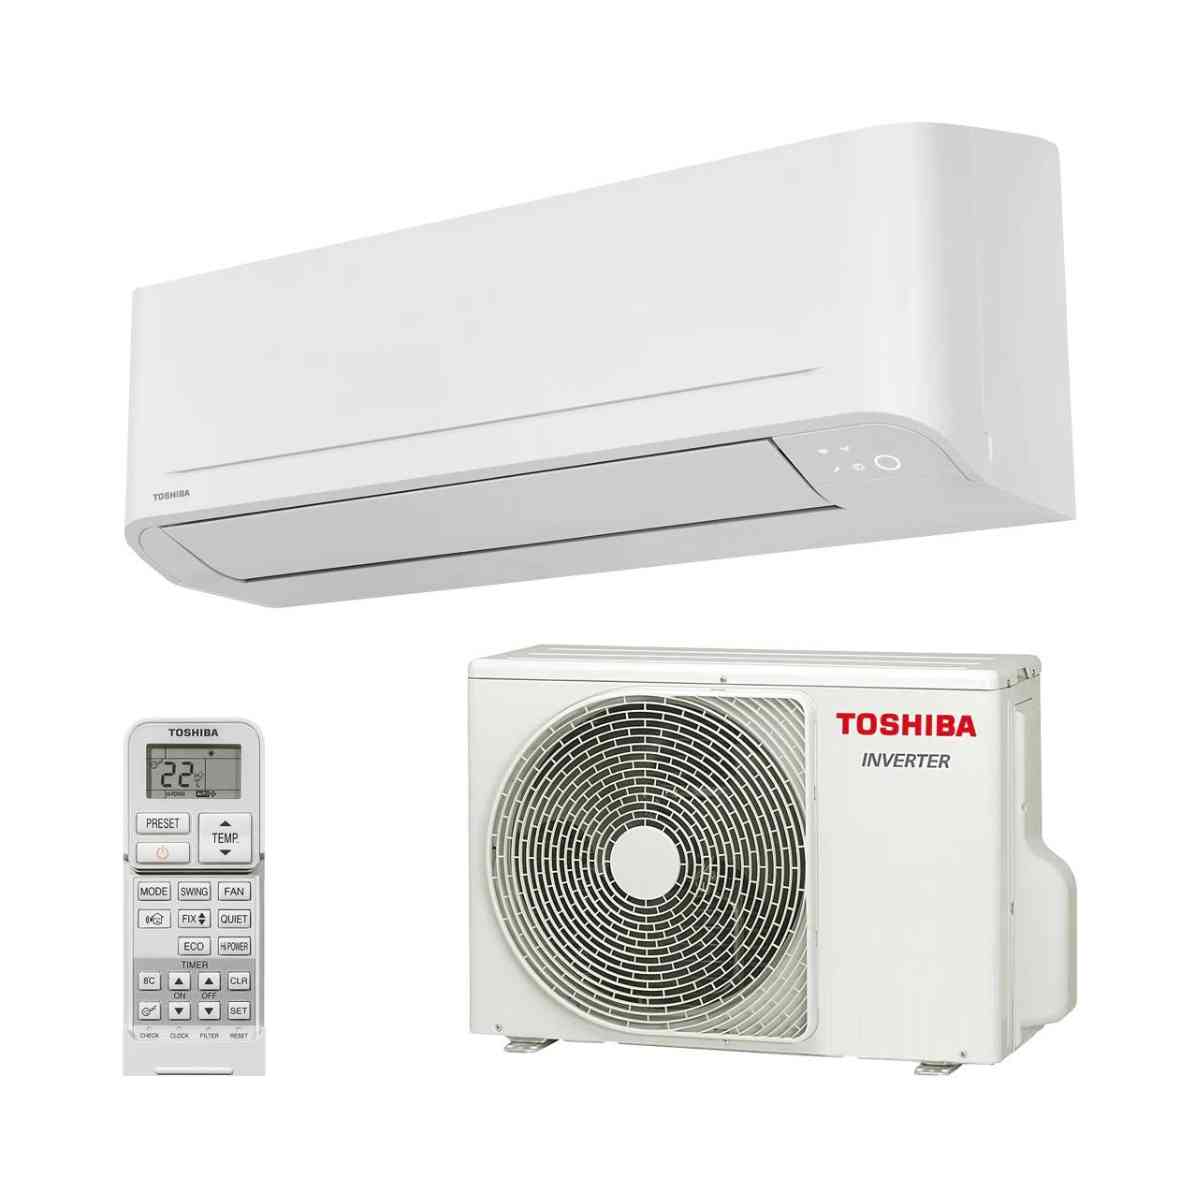 Ar condicionado fixo 1x1 Toshiba Seiya+ 13 3,3 kW 11000 BTU com referência SEIYA+ 13 da marca TOSHIBA